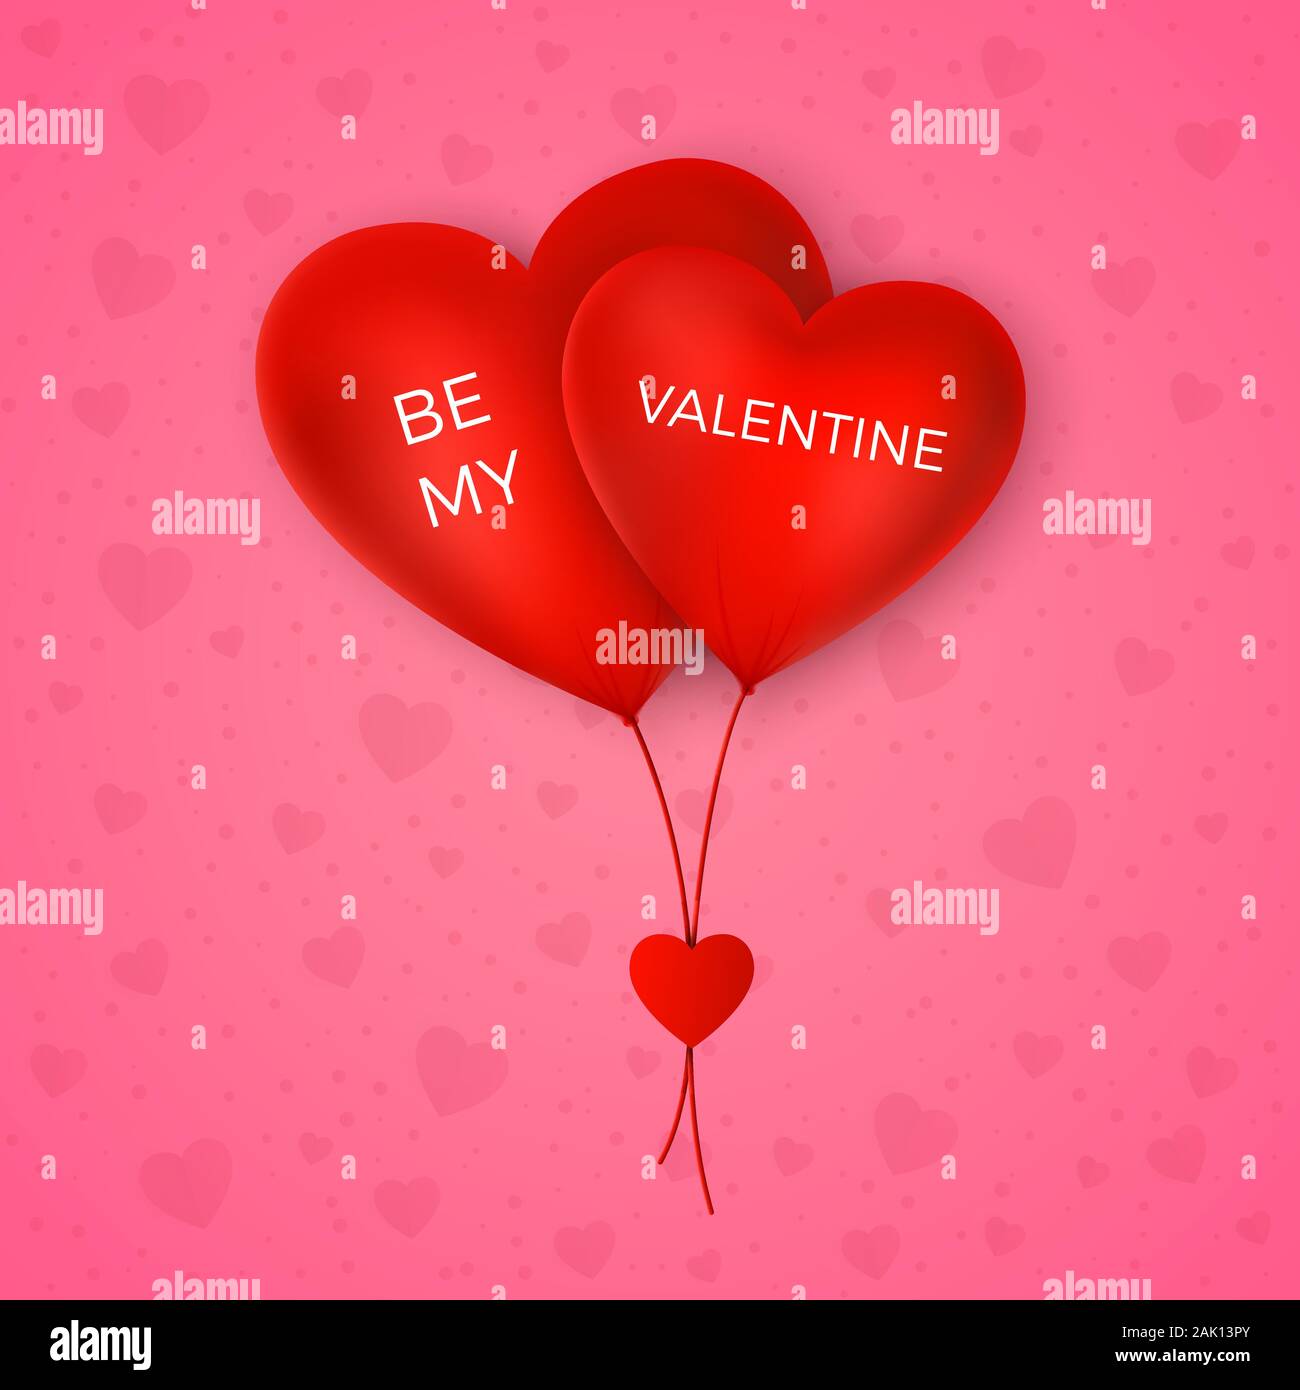 Valentinstag Grusskarten. Paar Luftballons rote Farbe Herz Form. My Valentine. Vektor Stock Vektor